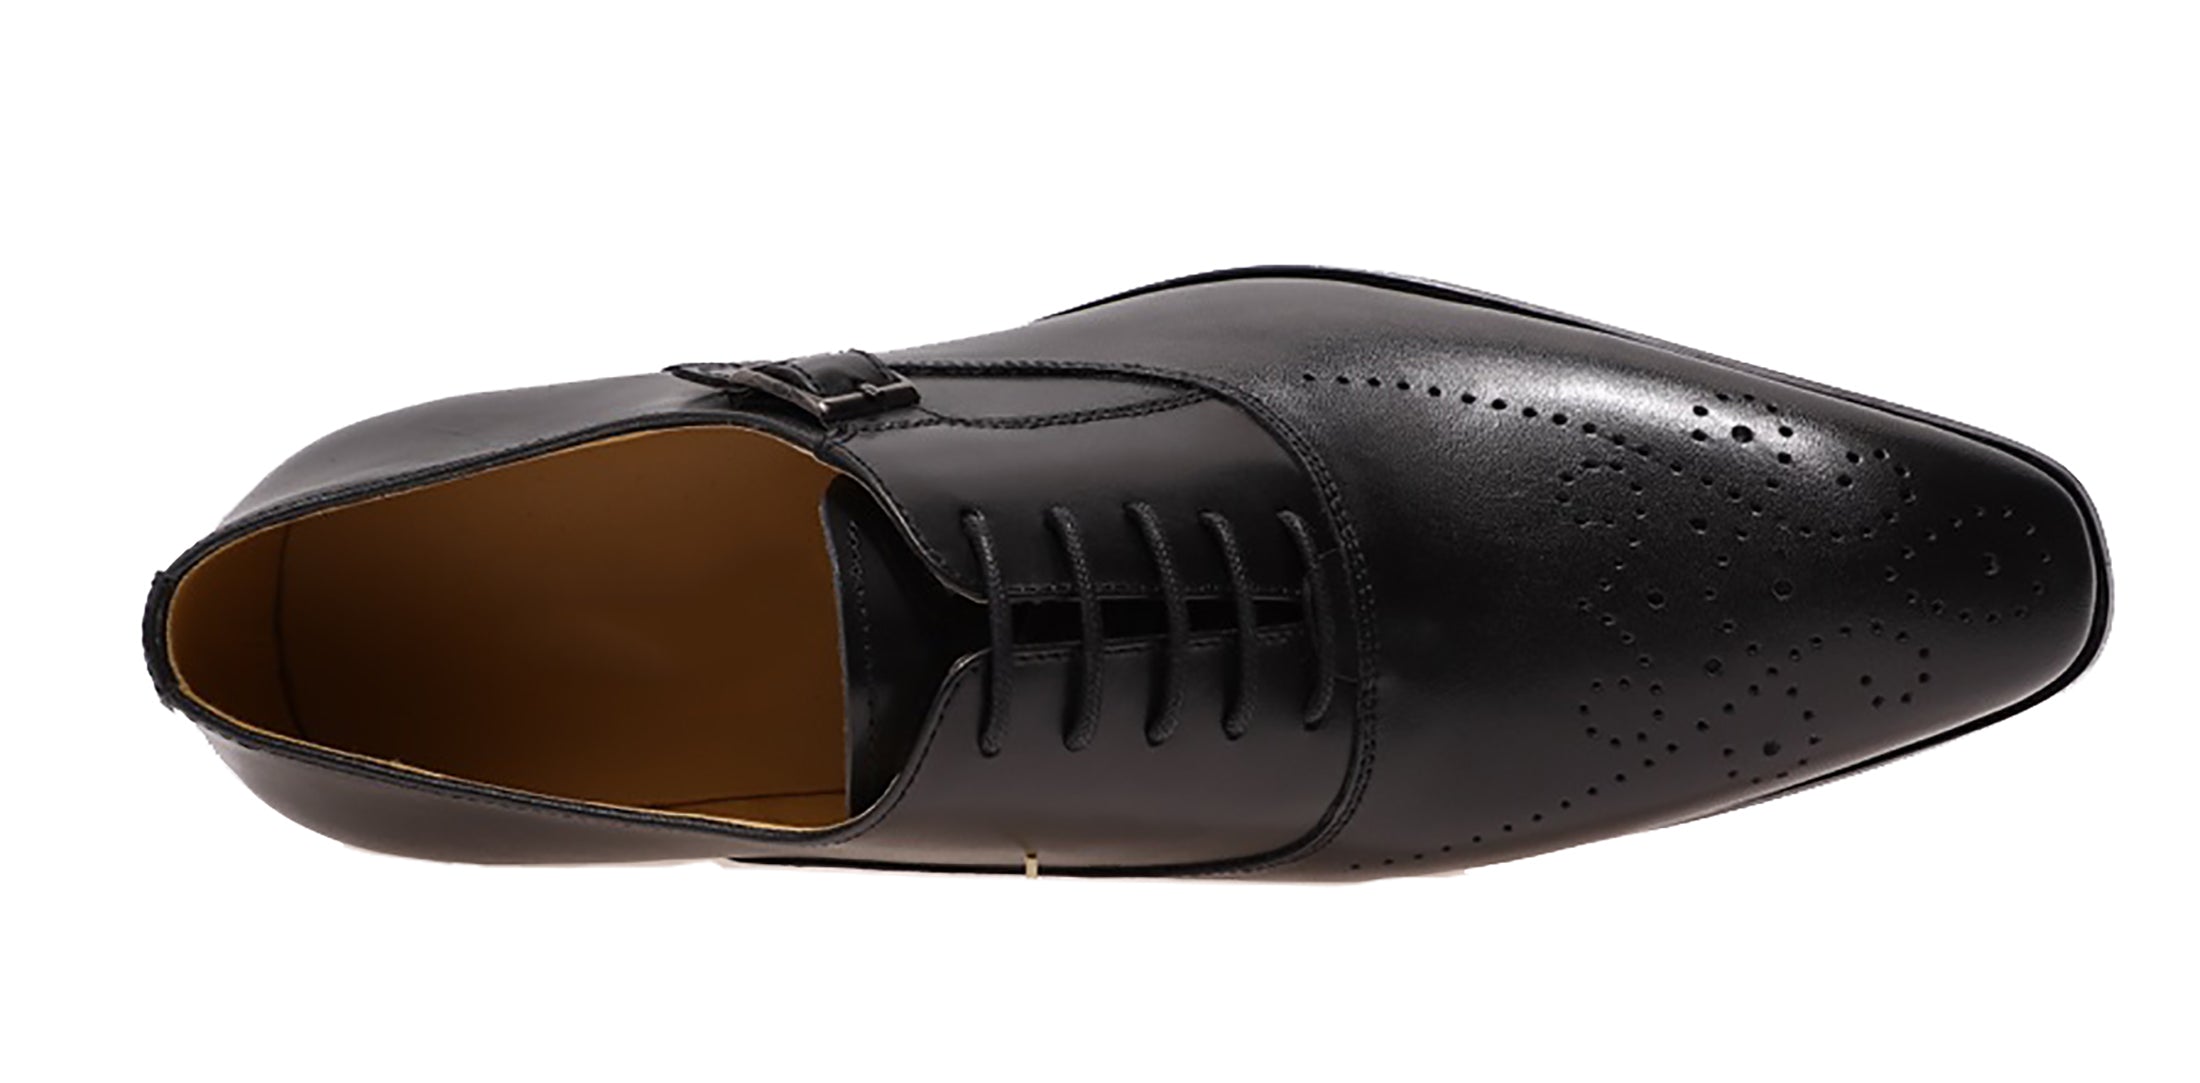 Zapatos Oxford hechos a mano con hebilla Tuexdo para hombre